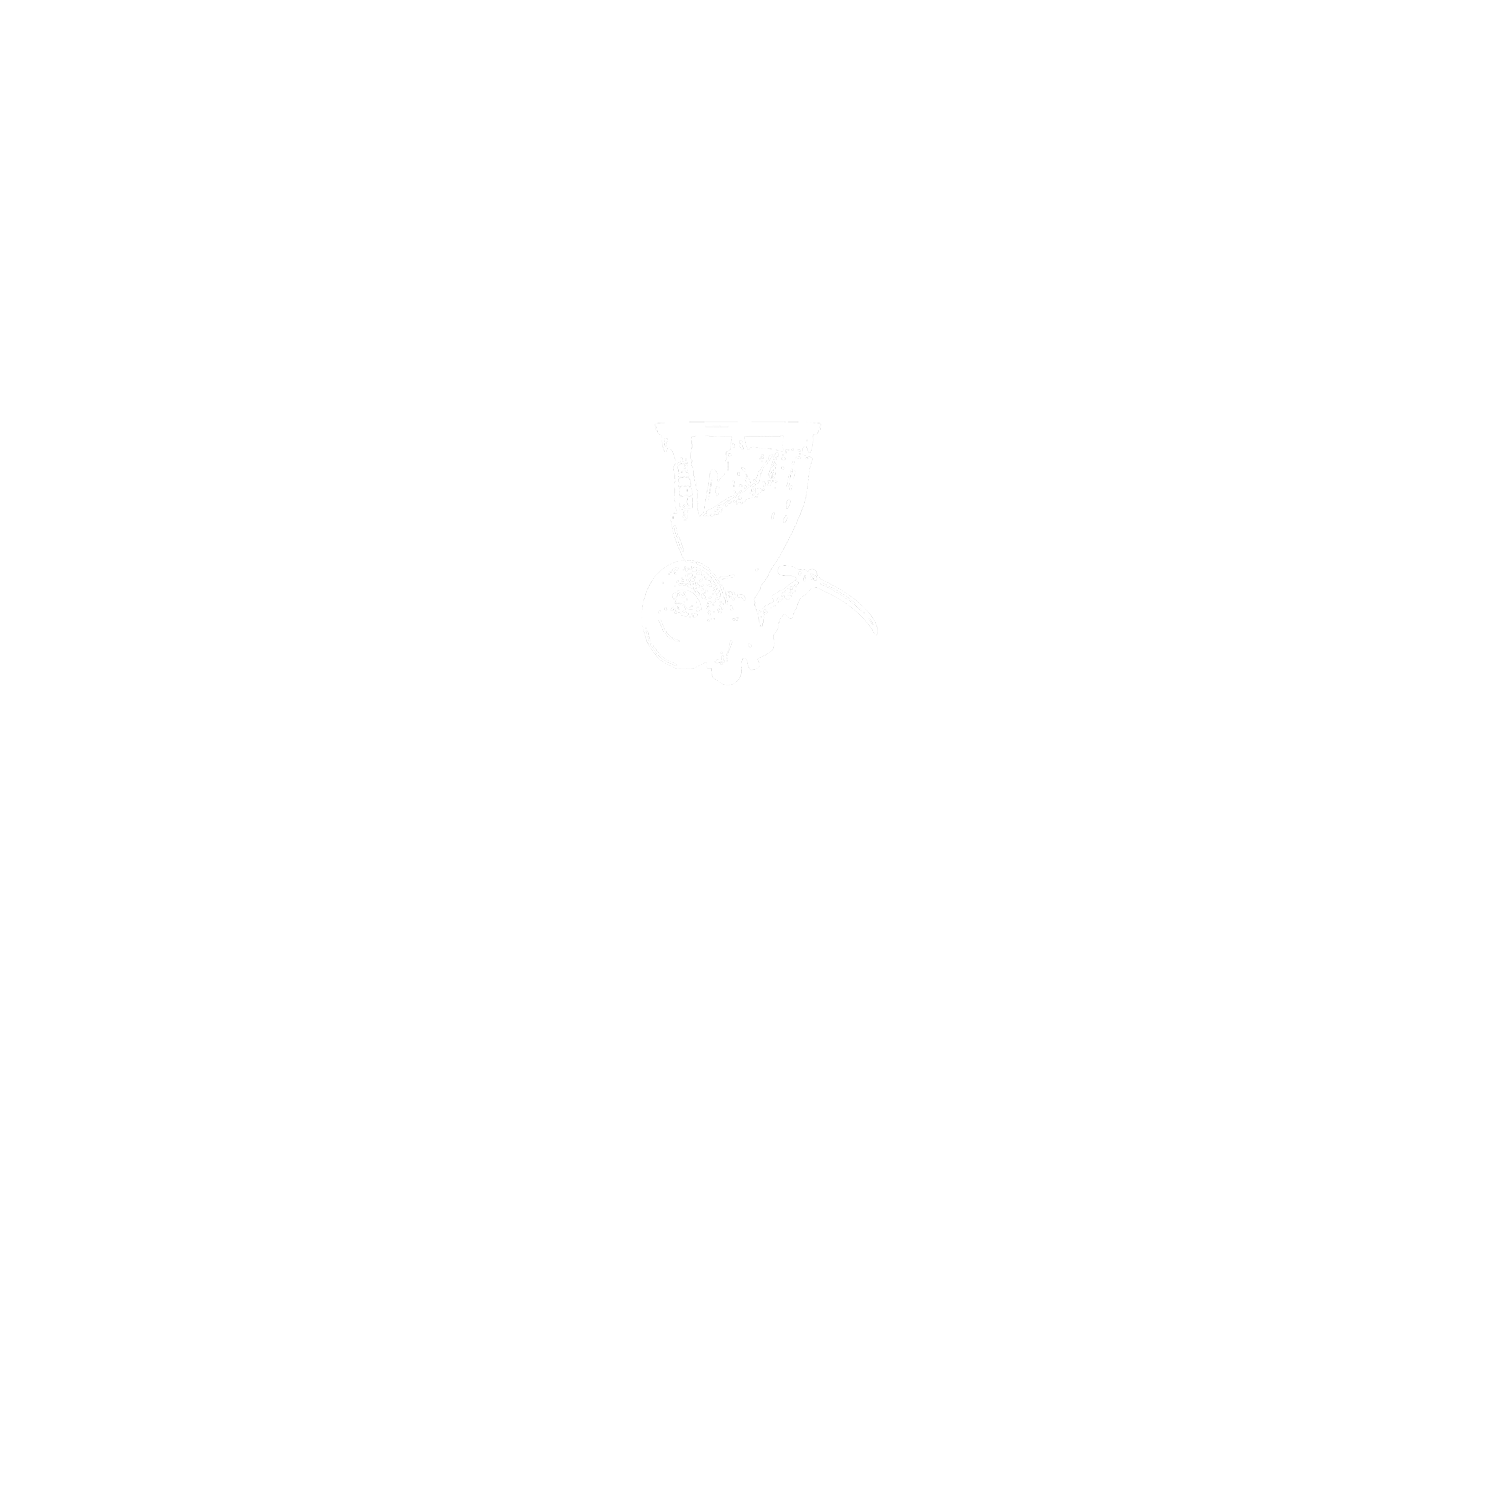 The STL Smith